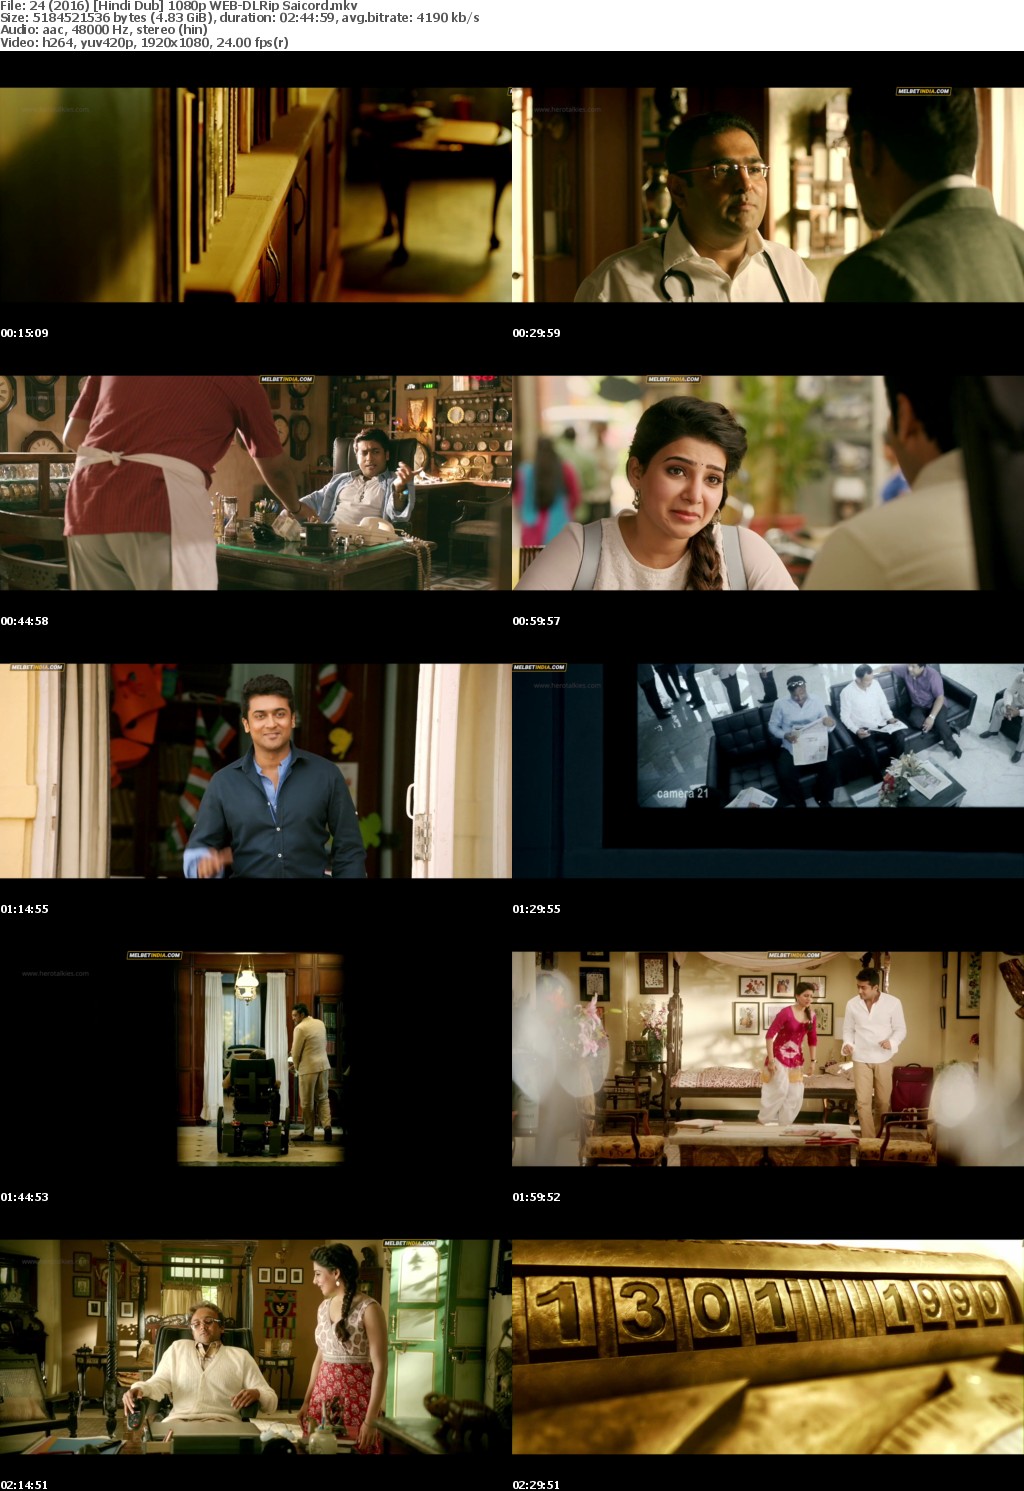 24 (2016) Hindi Dub 1080p WEB-DLRip Saicord